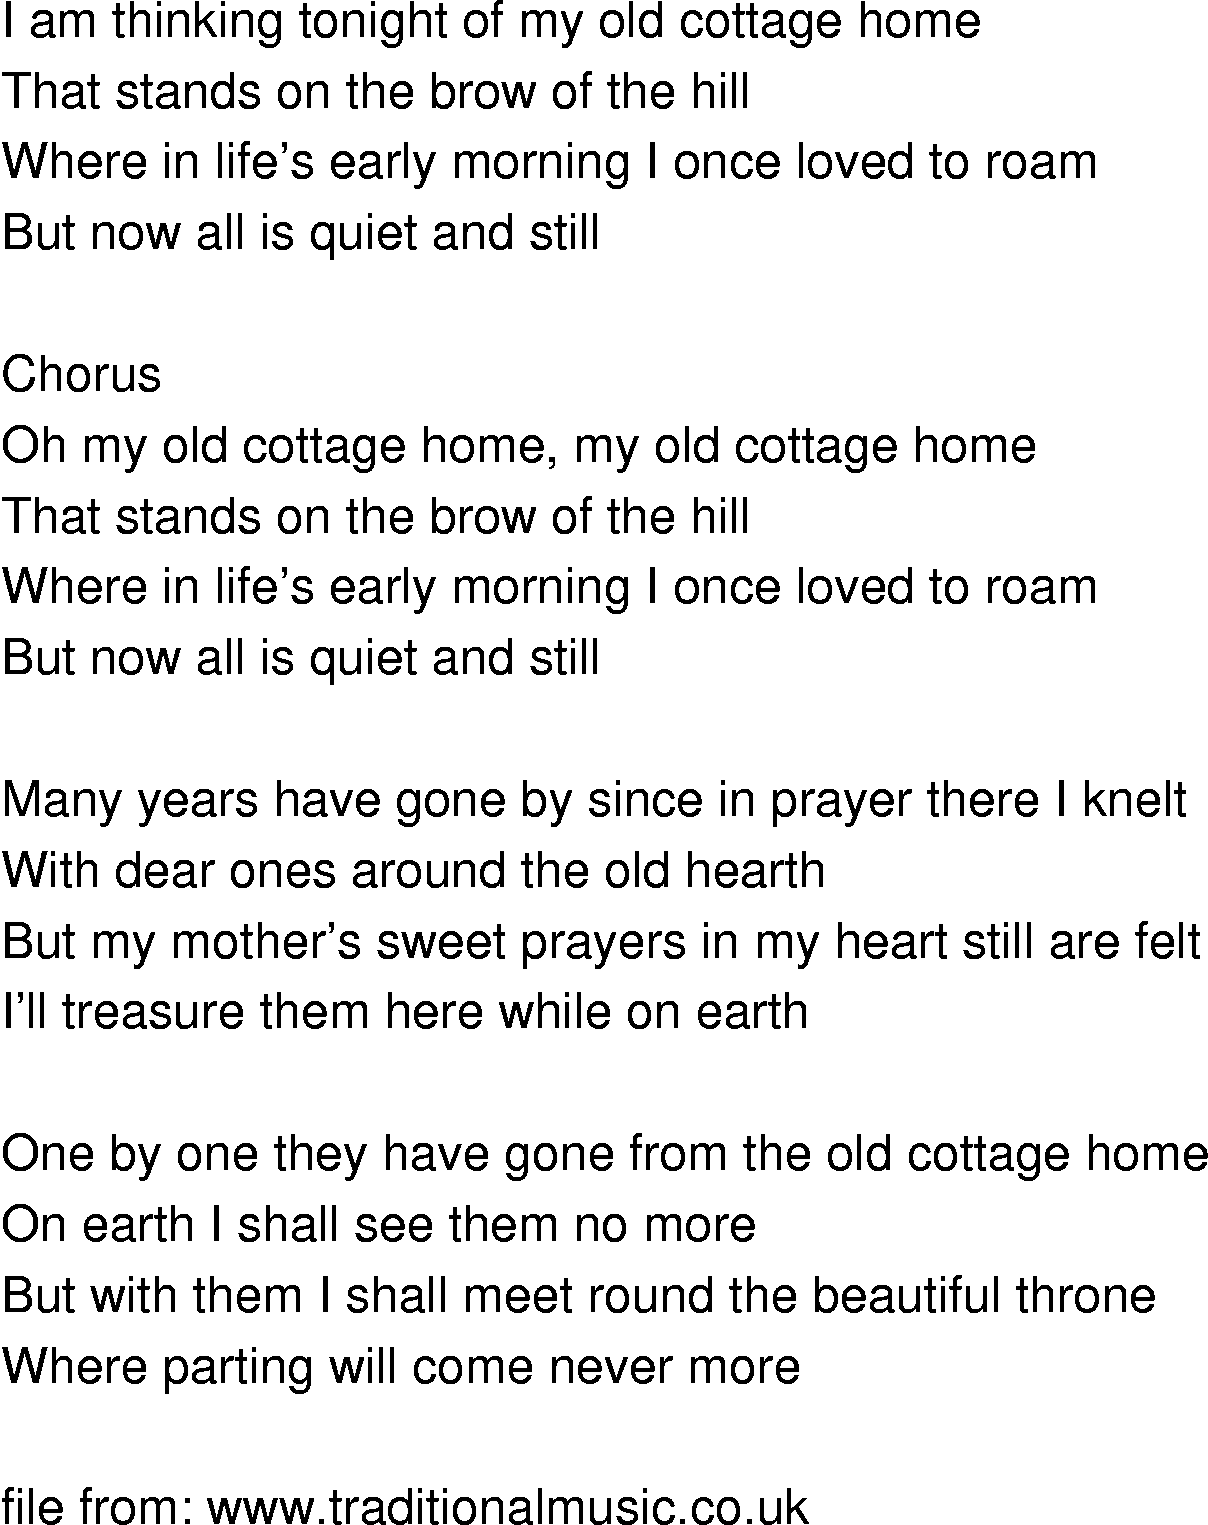 Old-Time (oldtimey) Song Lyrics - my old cottage home